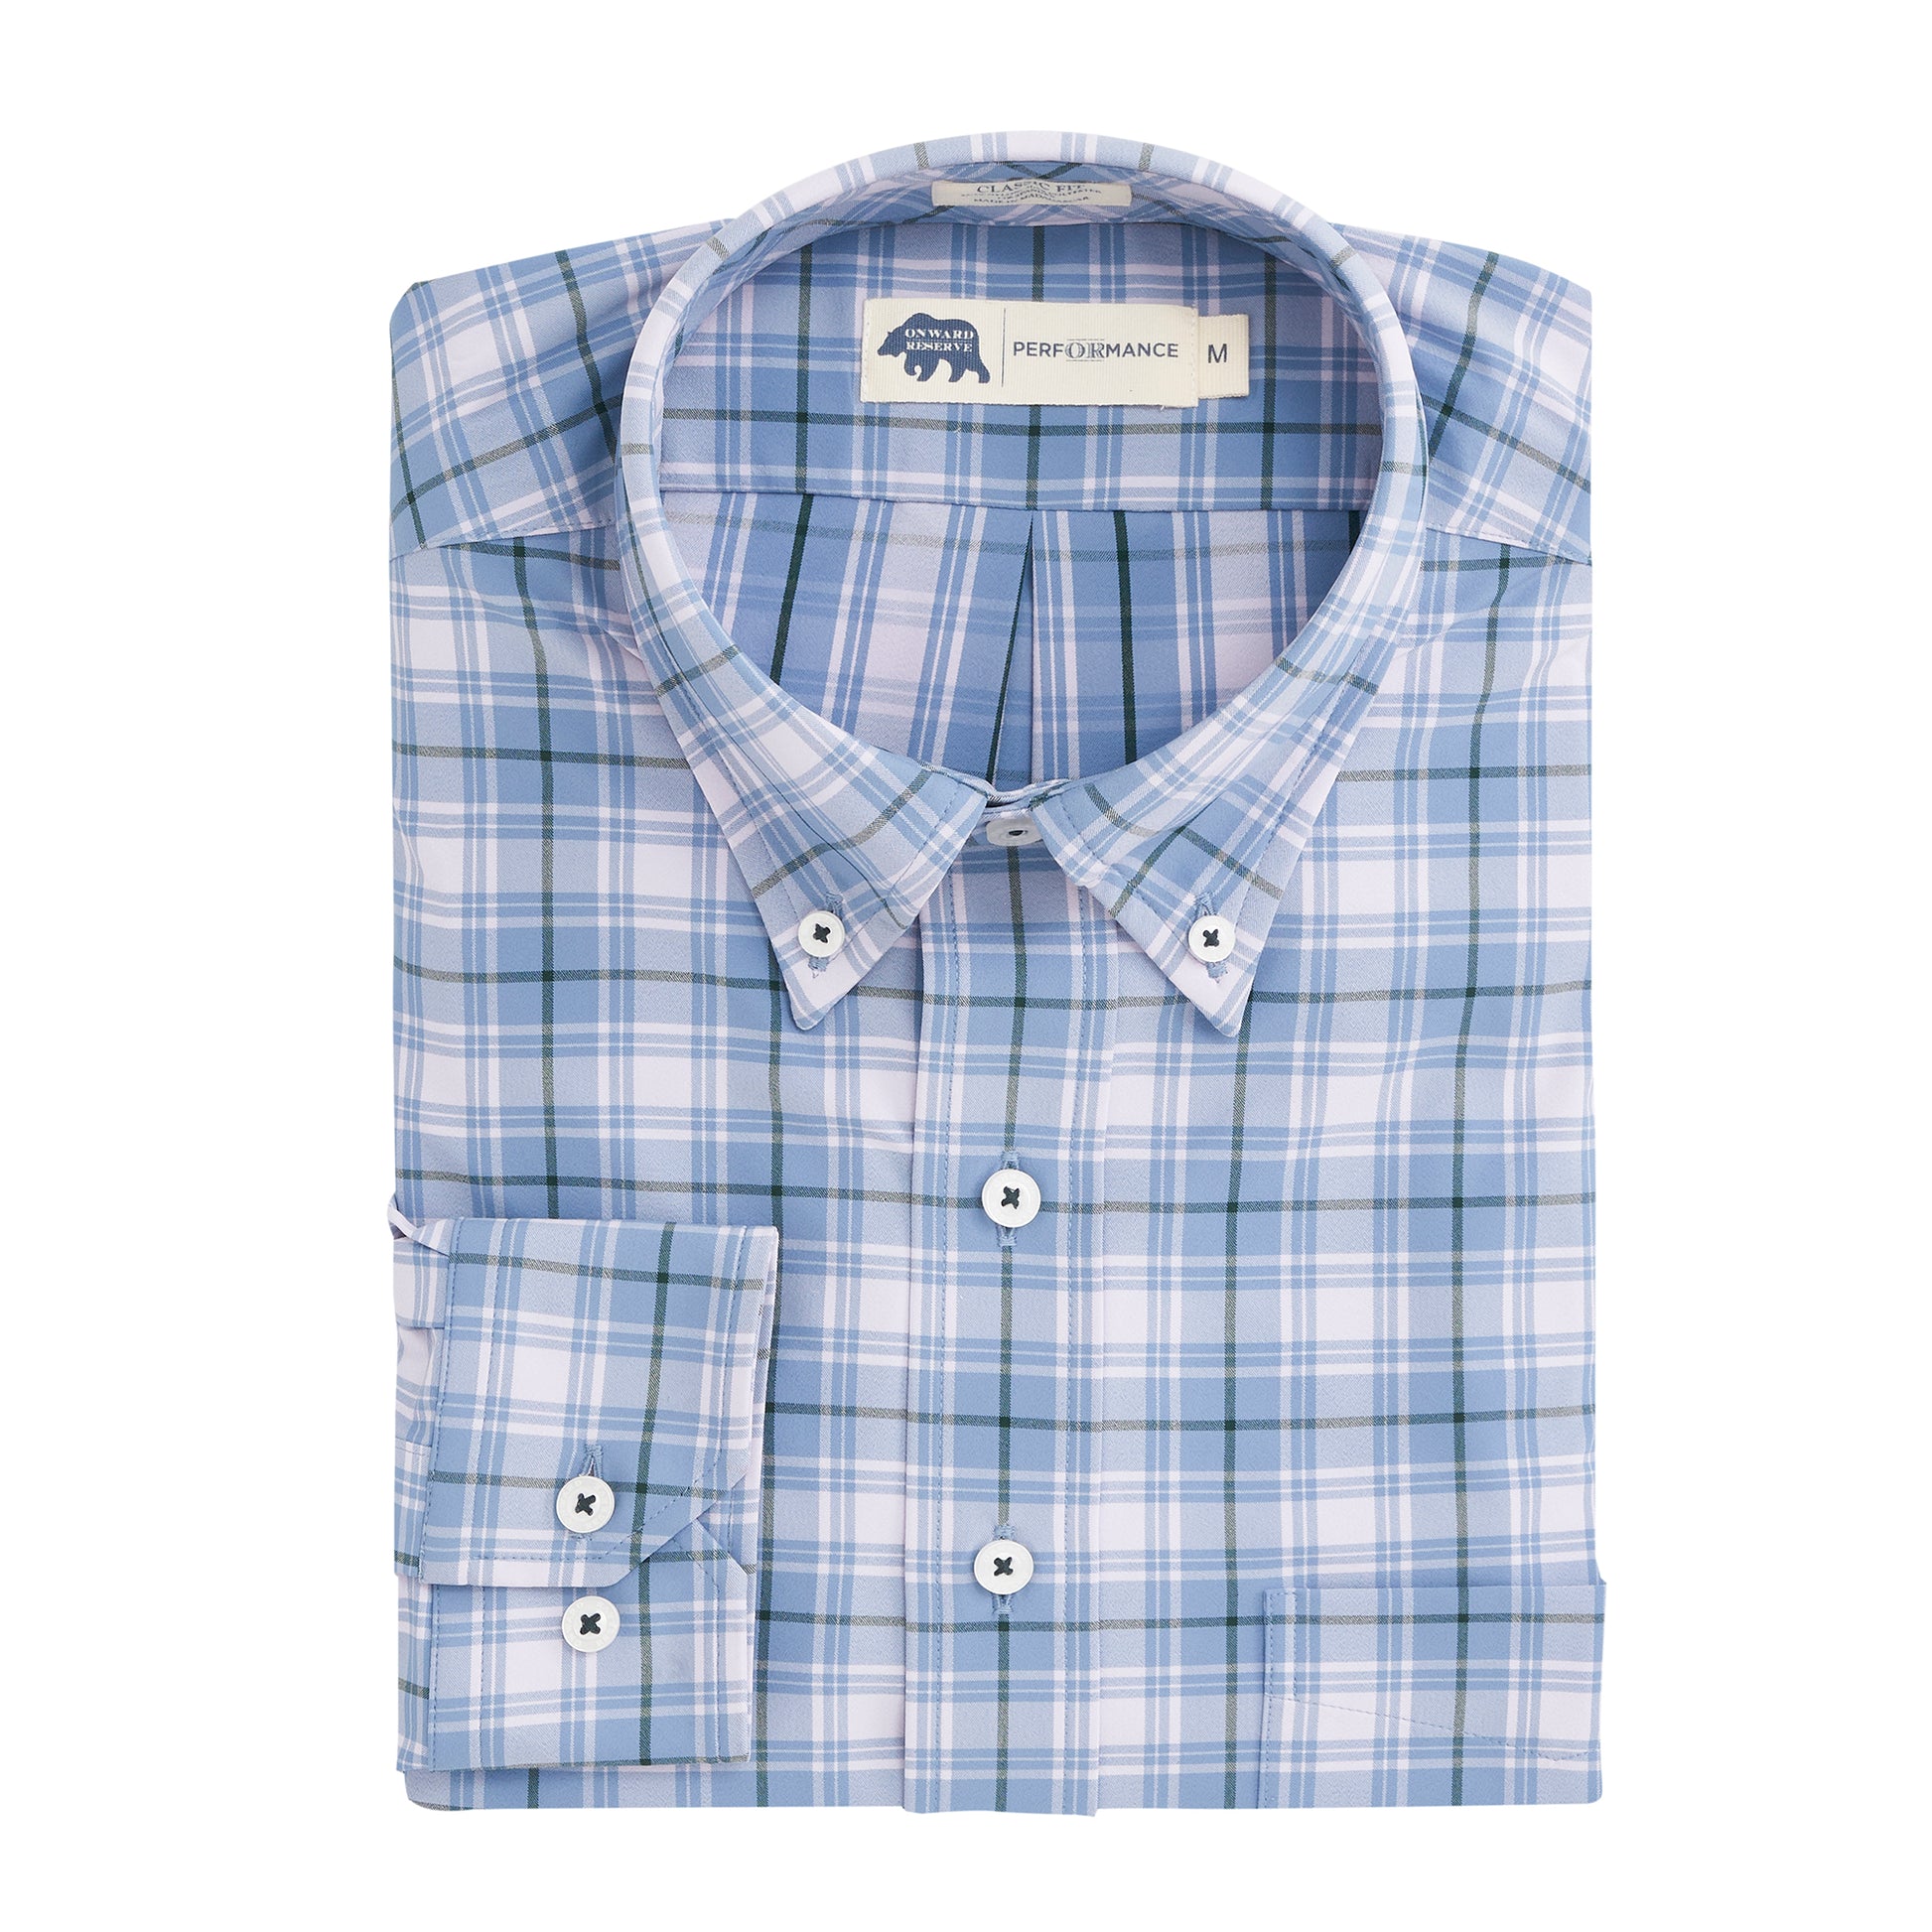 Onward Reserve Shirt Mens 2XL Blue Plaid Performance Button Up